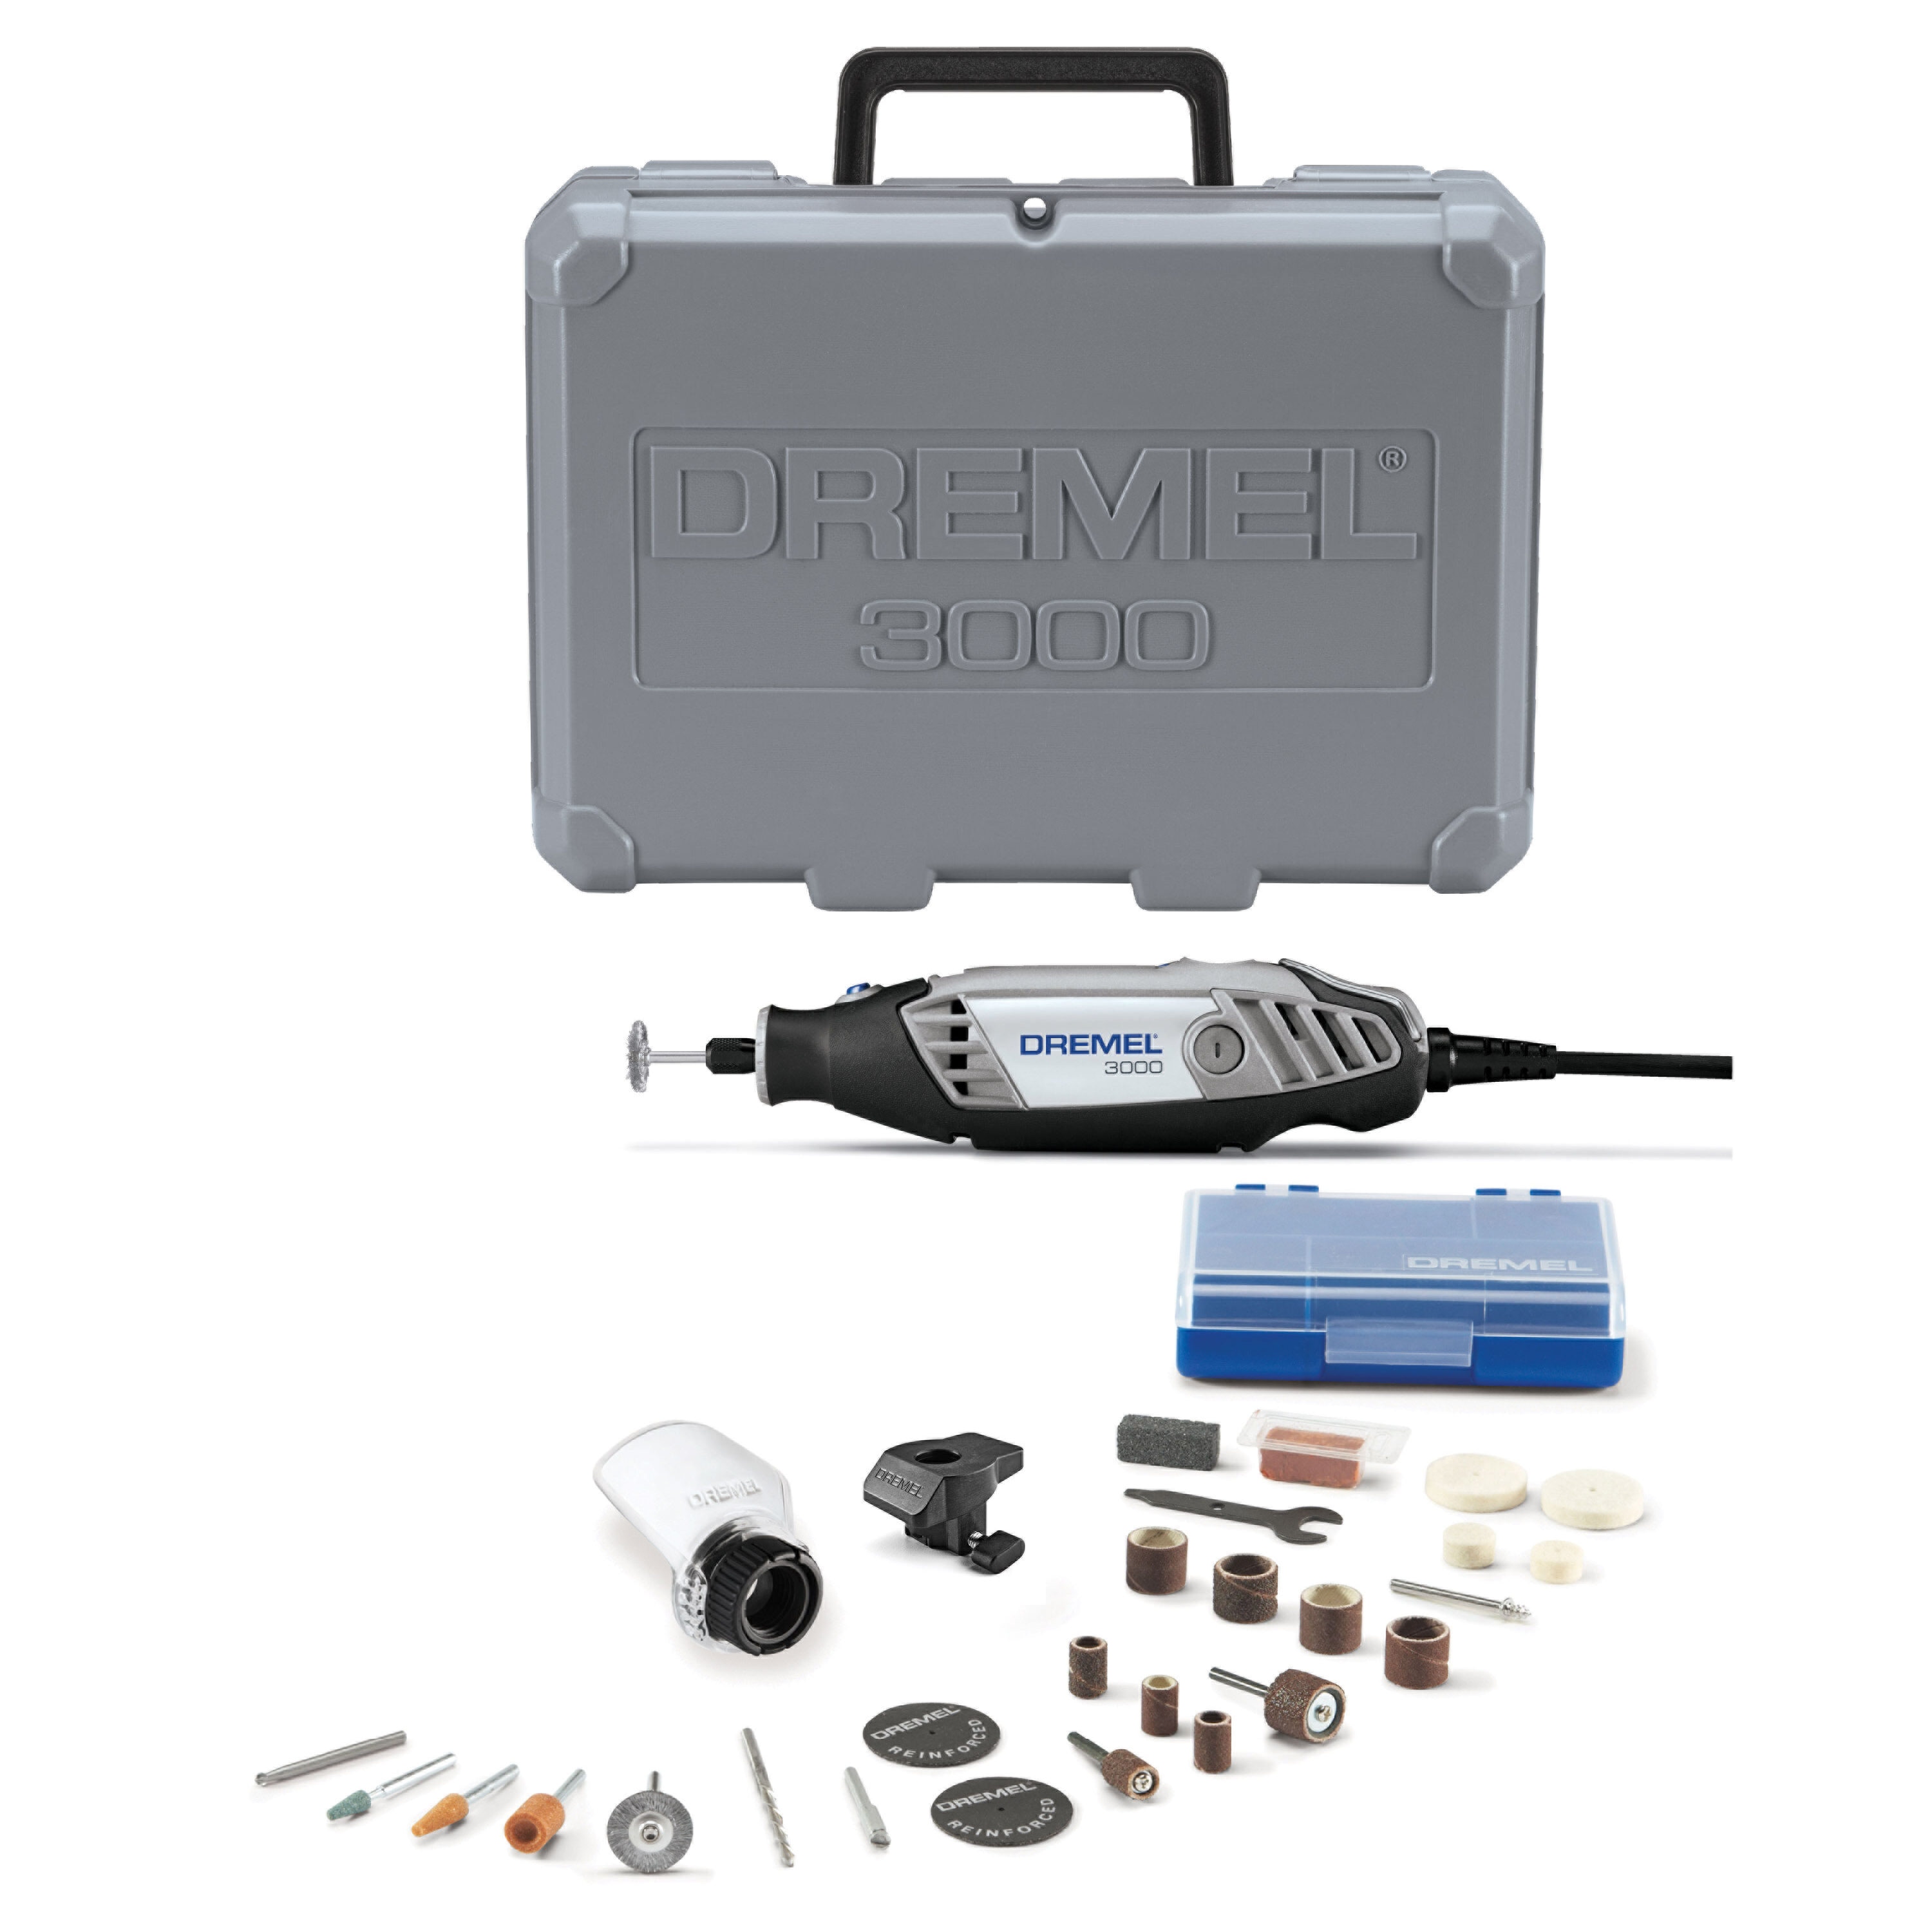 Dremel 7350 4 Volt 12000 RPM Cordless Rotary Tool Kit - Black for sale  online